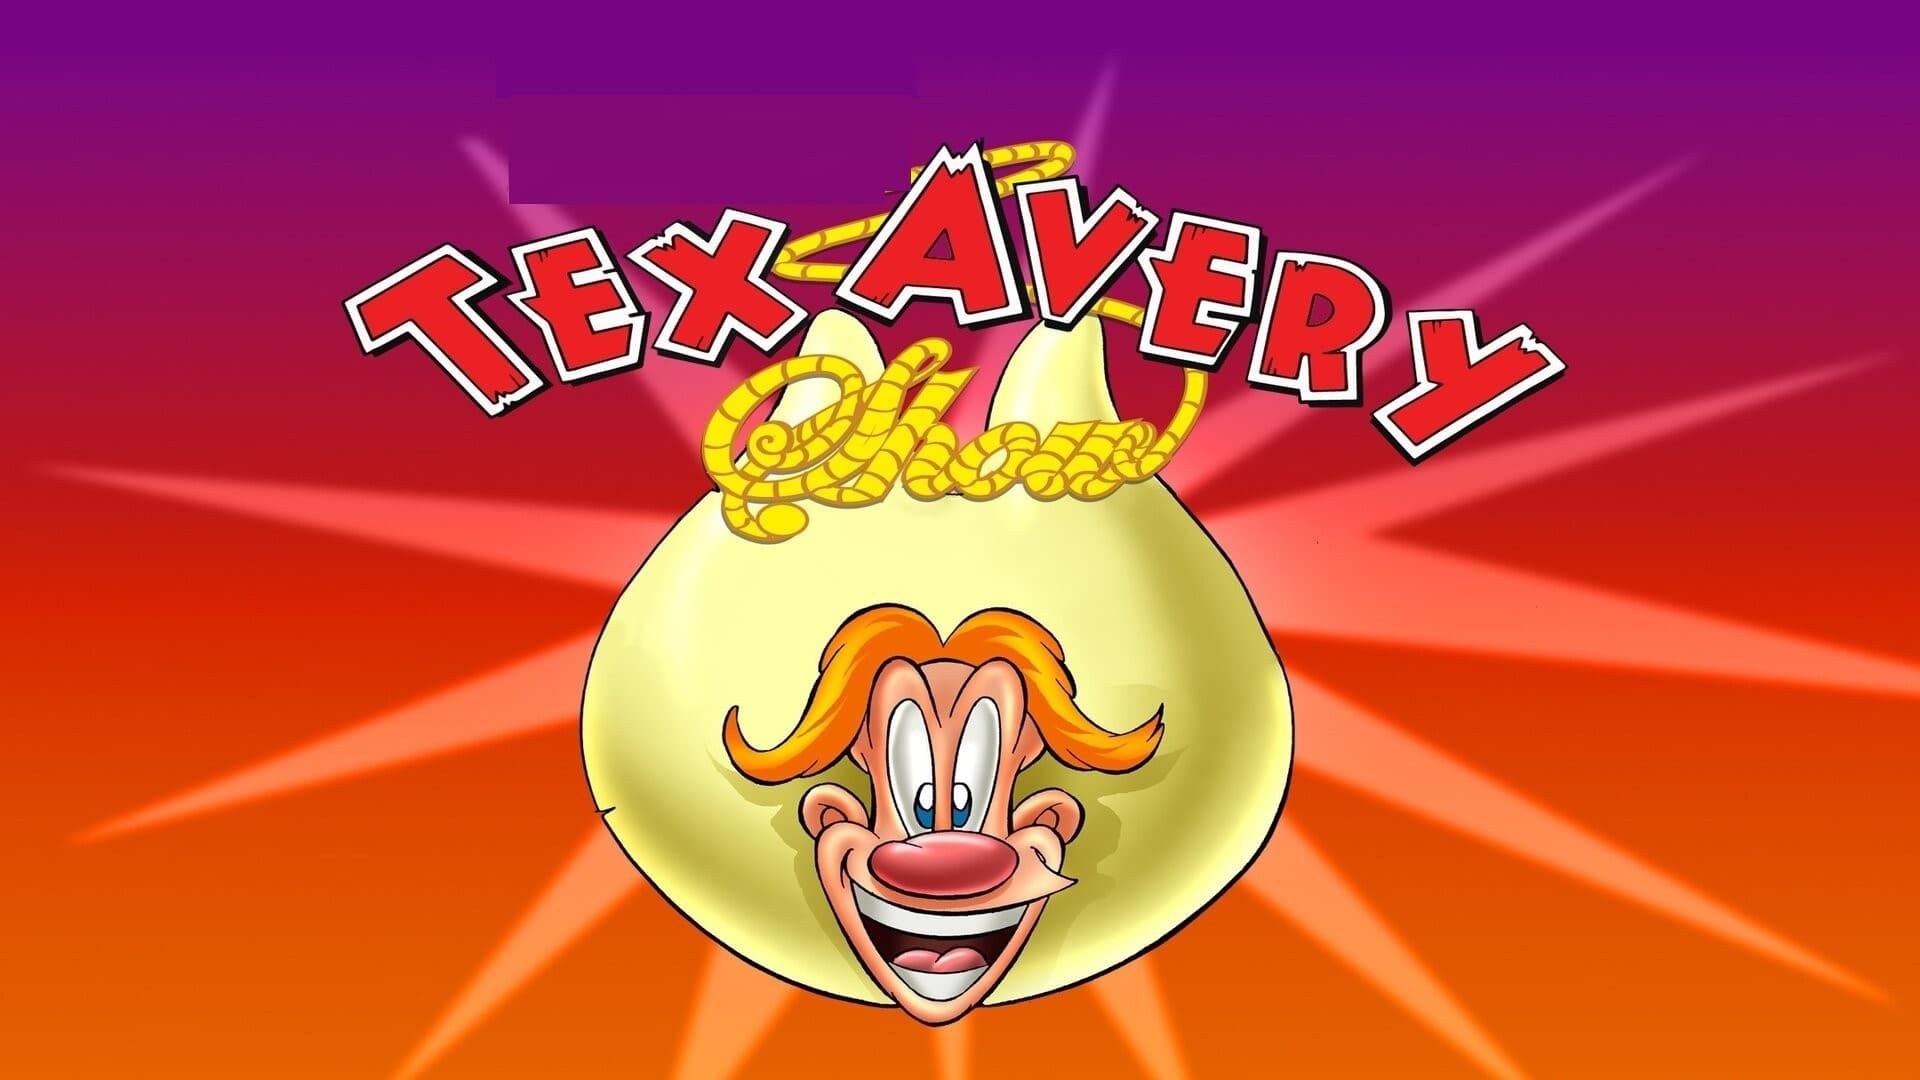 The Wacky World of Tex Avery background